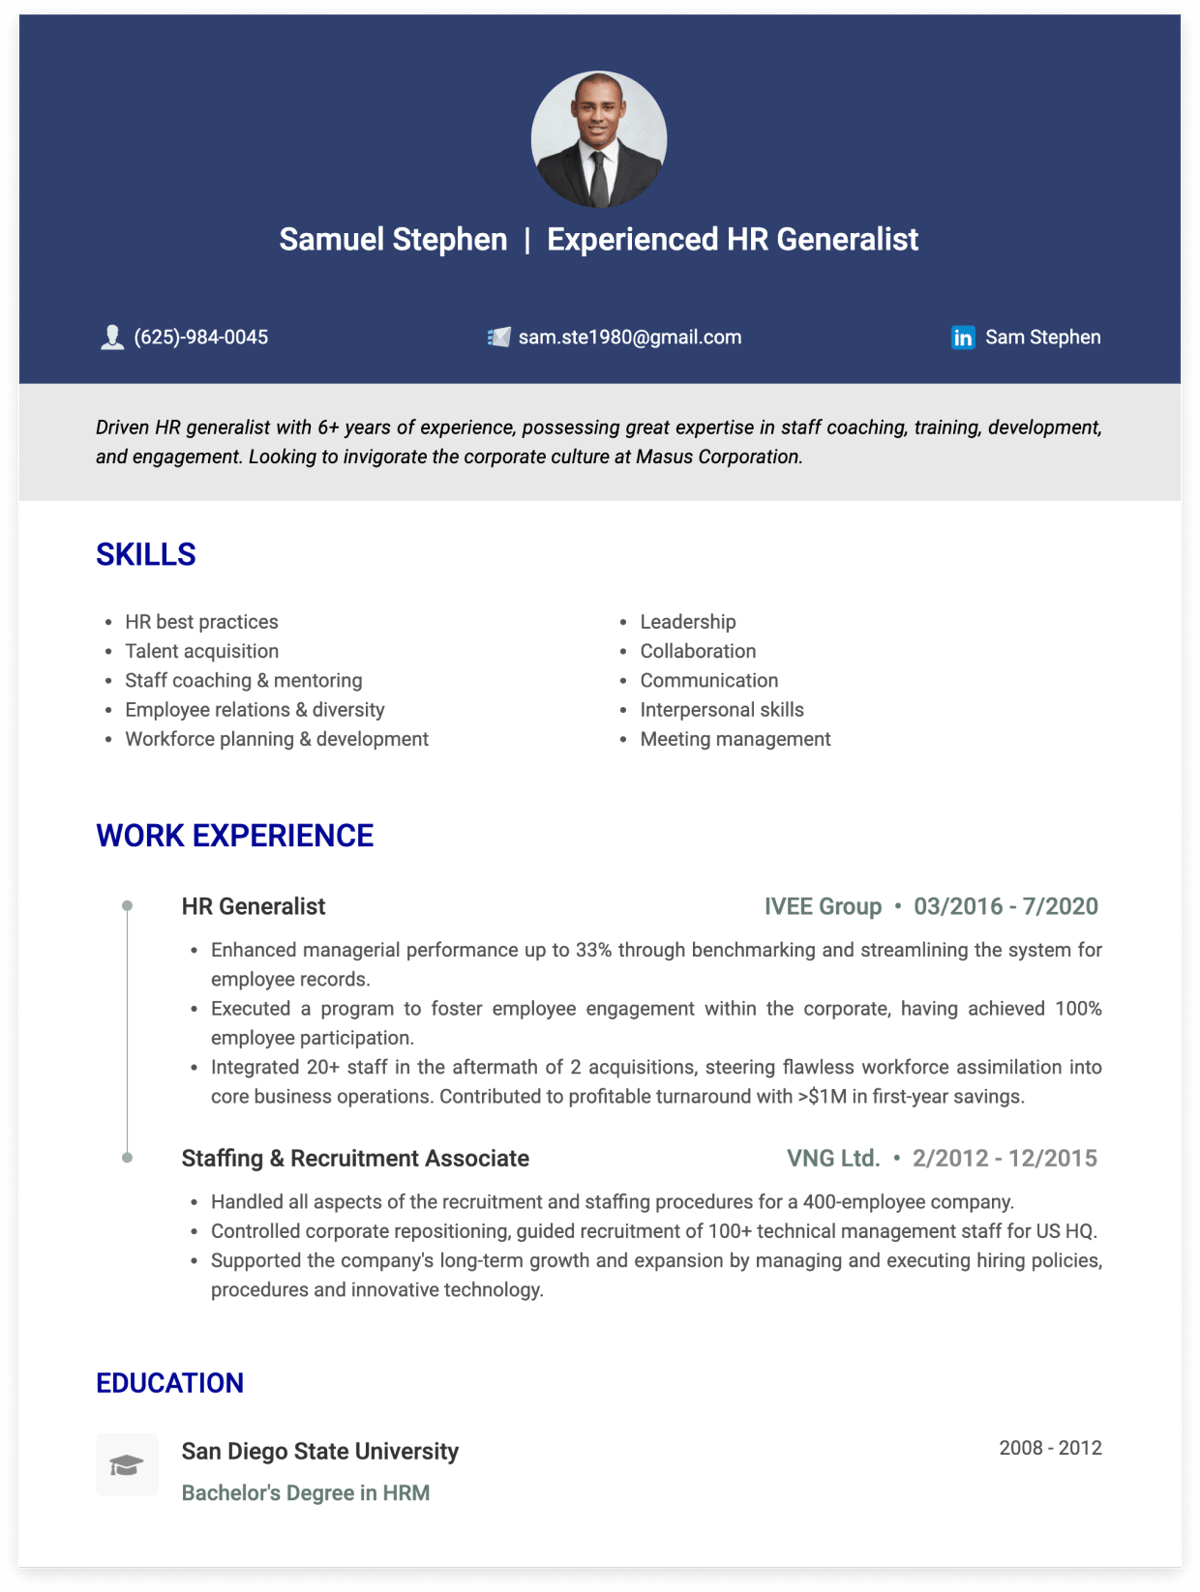 HR Generalist resume samples and skills